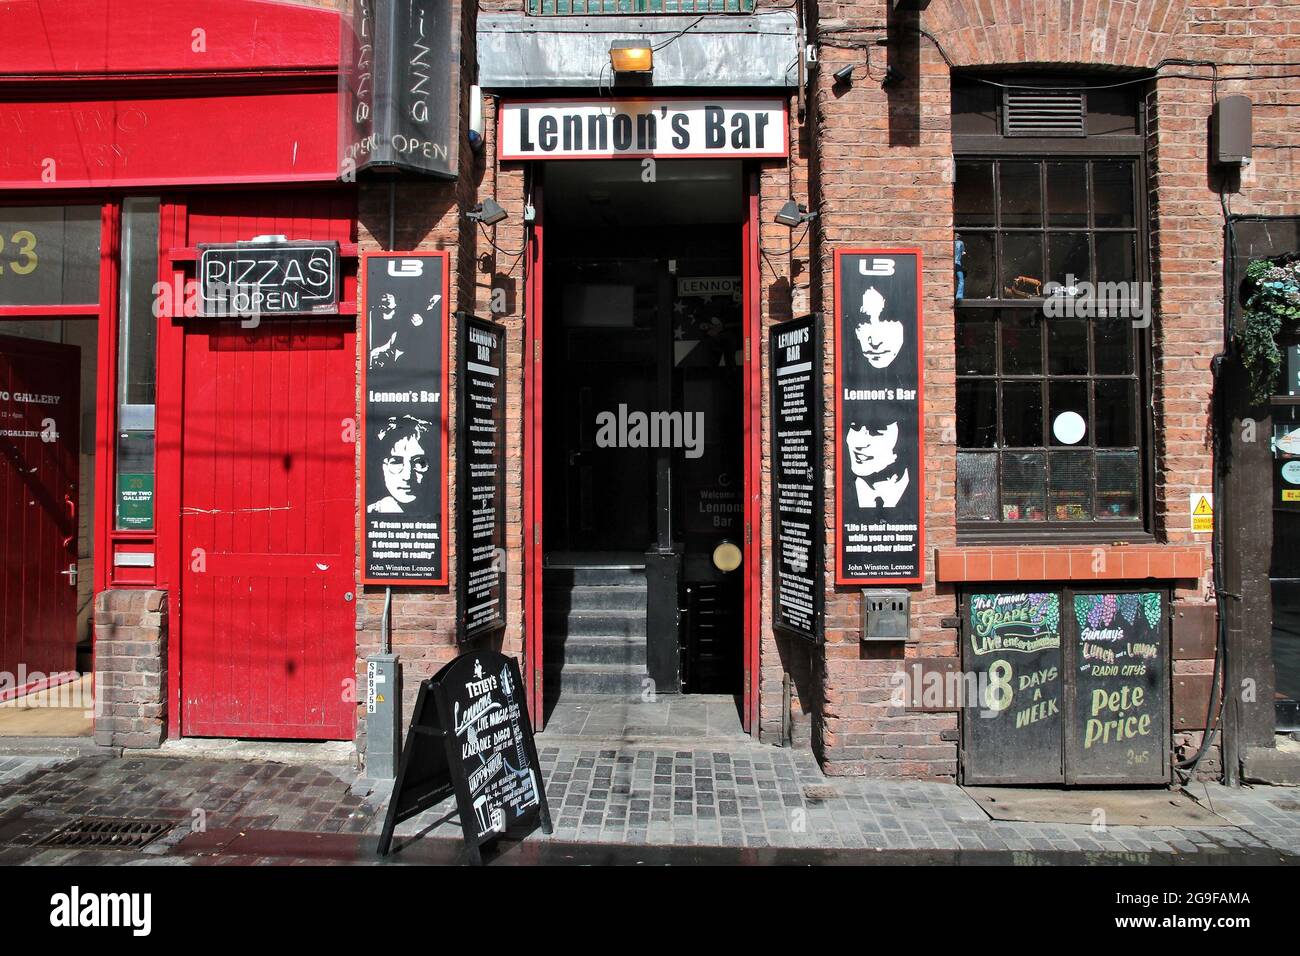 LIVERPOOL, Großbritannien - 20. APRIL 2013: Lennon's Bar in Liverpool, Großbritannien. Liverpool ist als Geburtsort der Beatles berühmt. Stockfoto